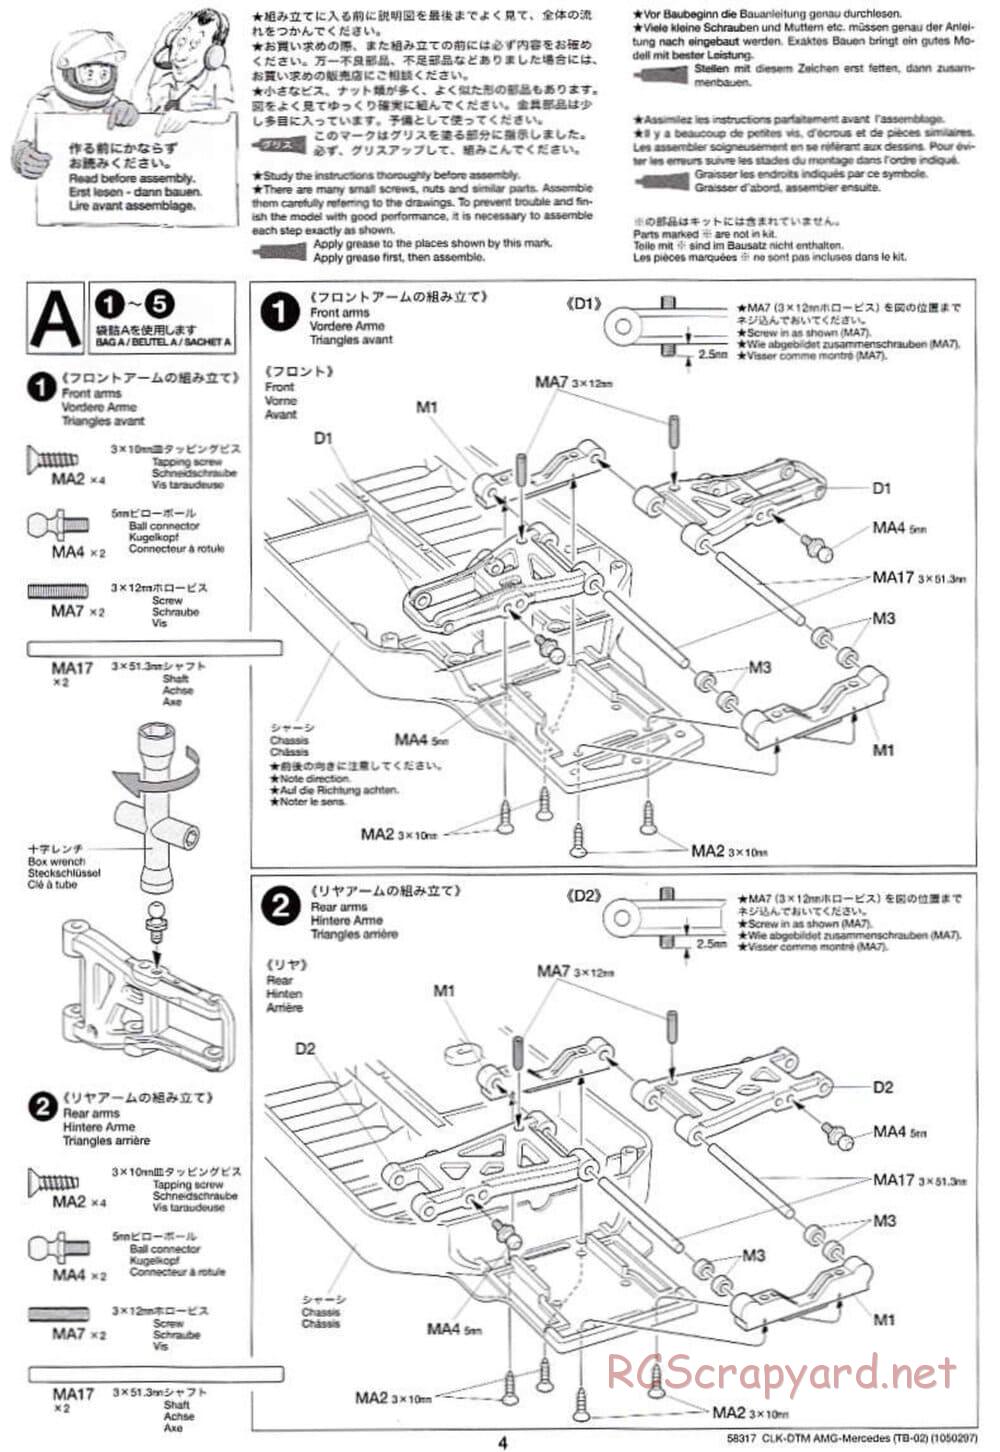 Tamiya - CLK DTM 2002 AMG Mercedes - TB-02 Chassis - Manual - Page 4